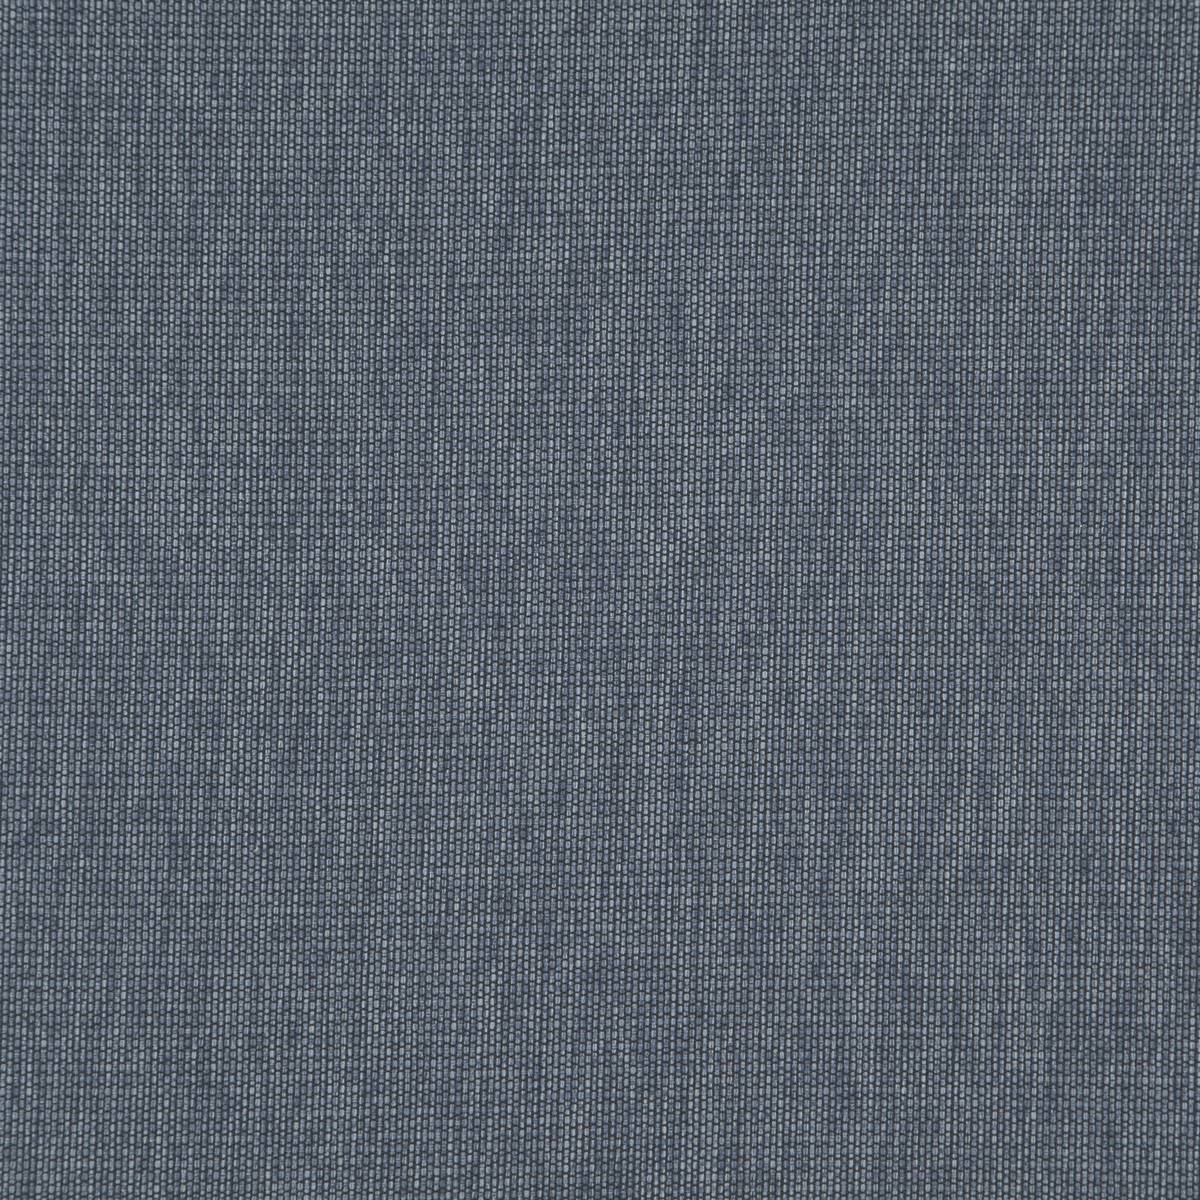 Penzance Saxe Fabric by Prestigious Textiles